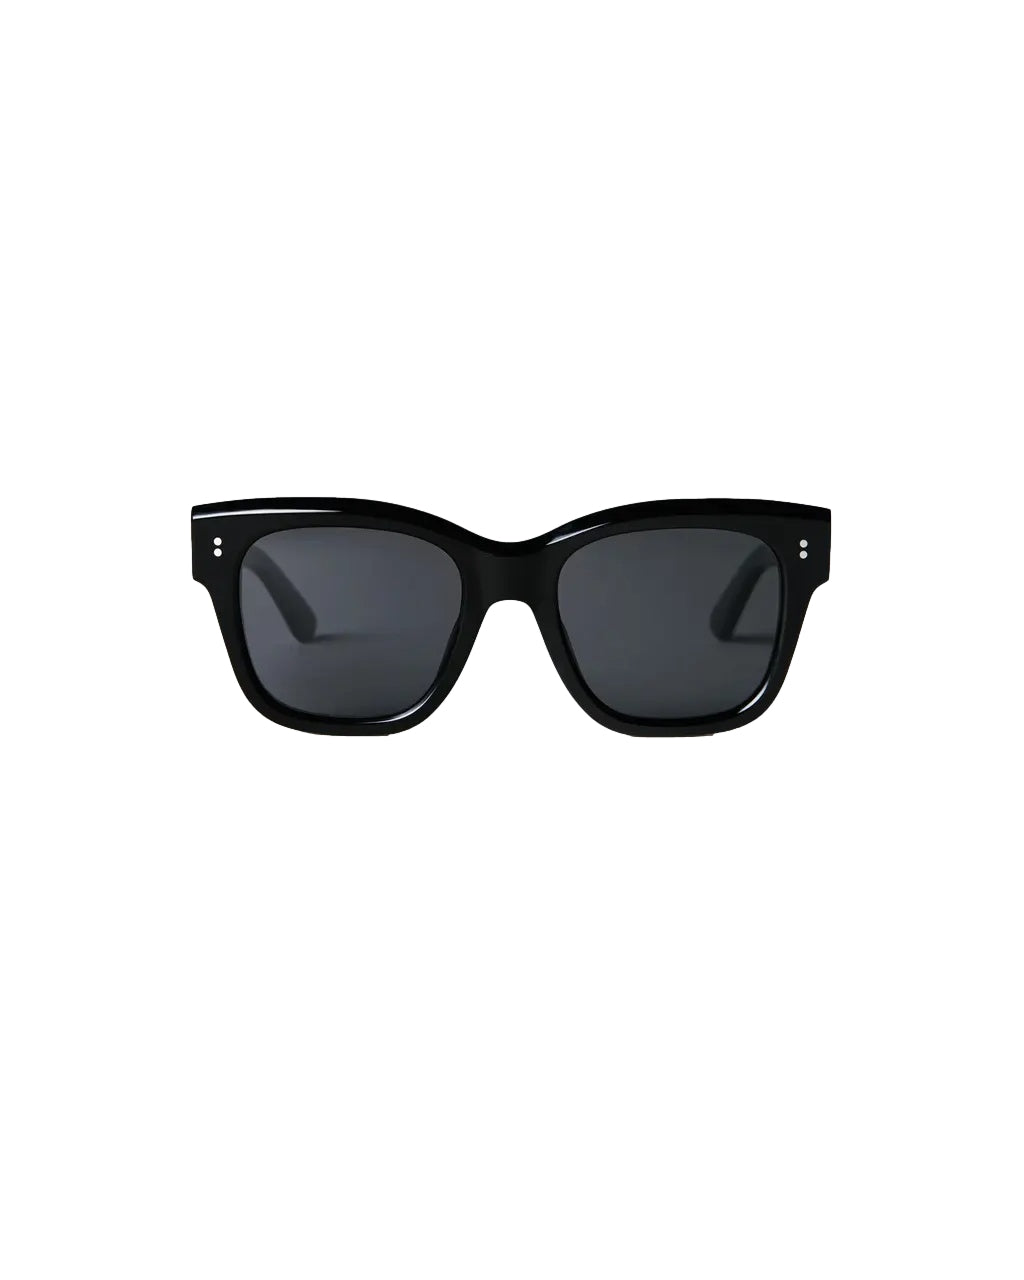 Chimi Eyewear 07 Black Solbriller Sort